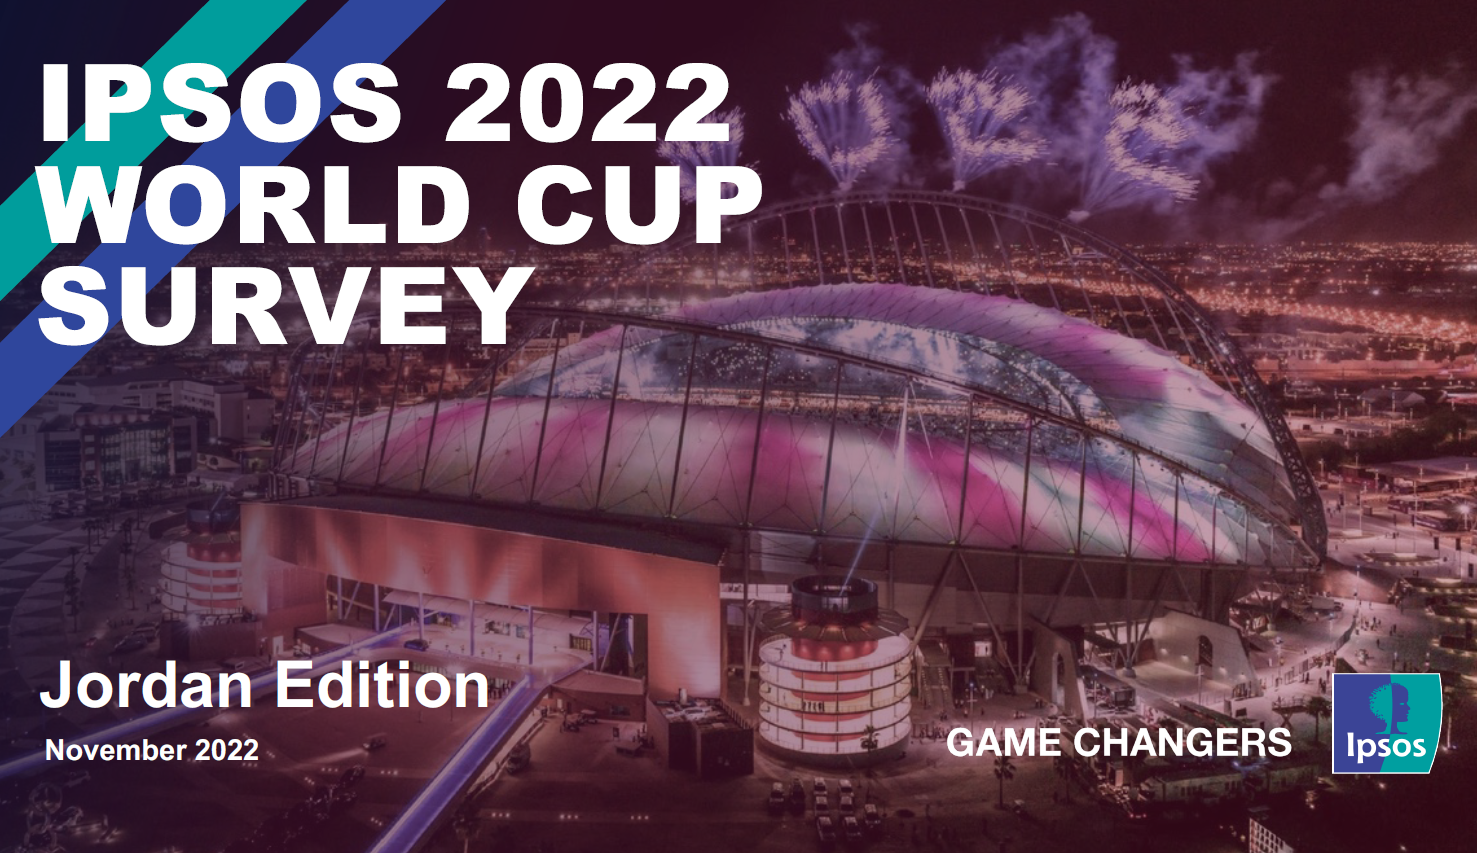 IPSOS 2022 WORLD CUP SURVEY